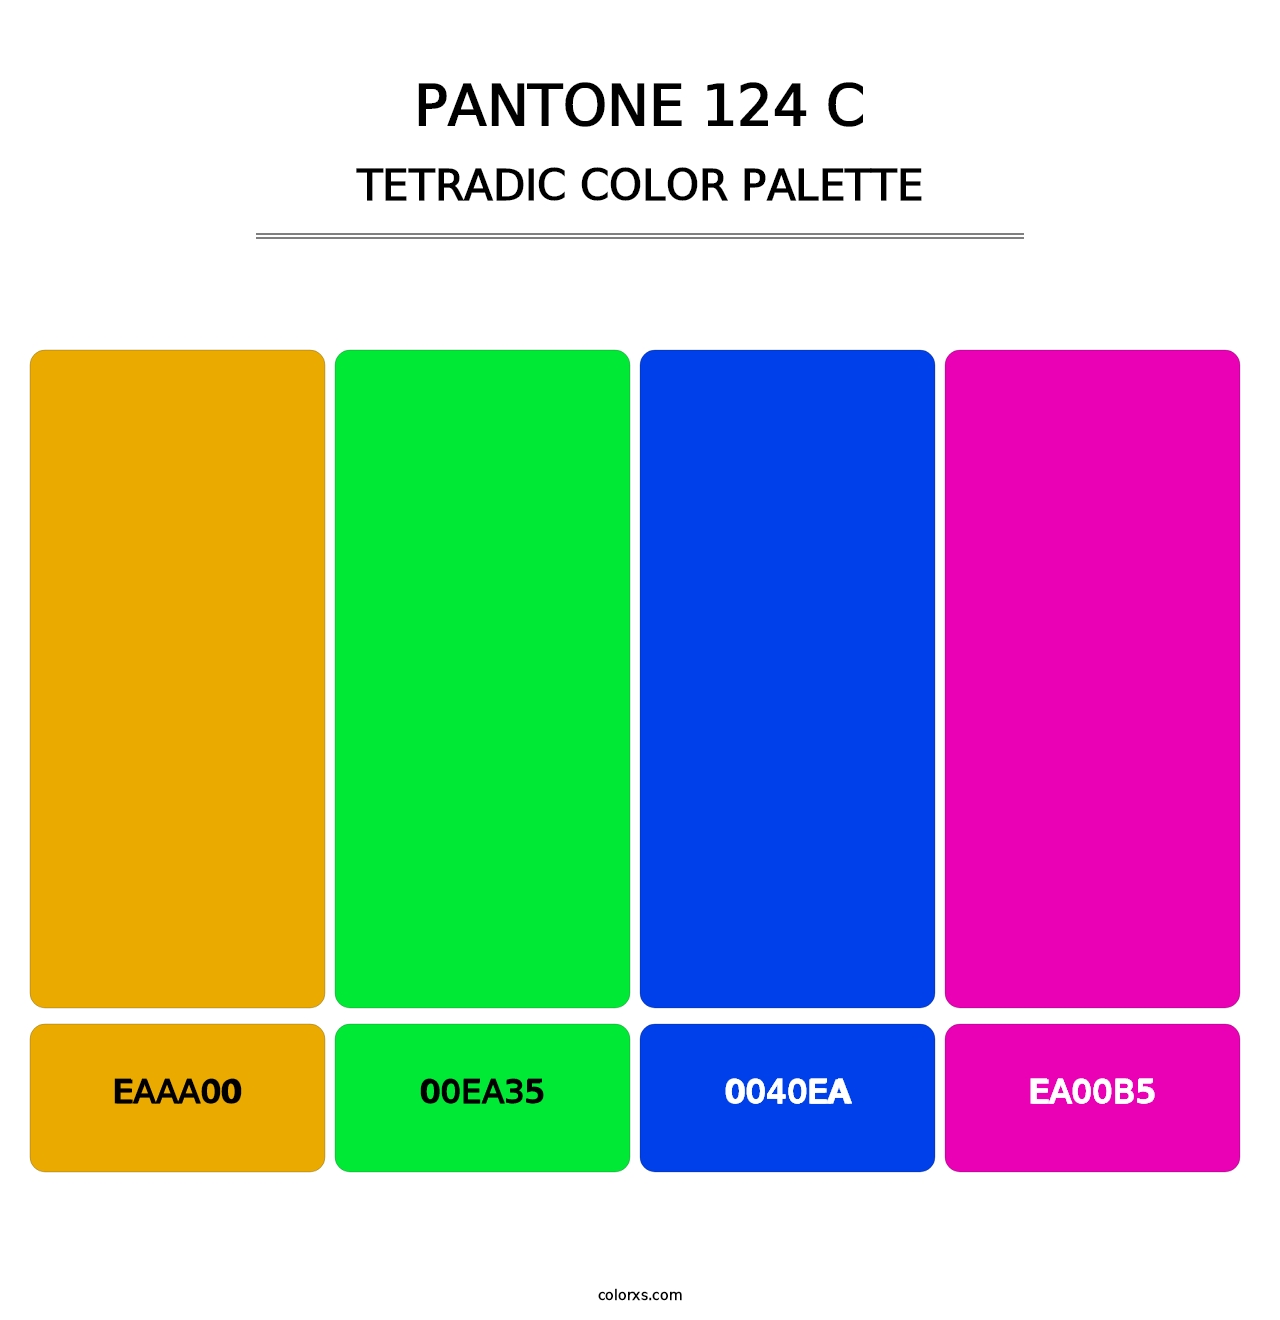 PANTONE 124 C - Tetradic Color Palette